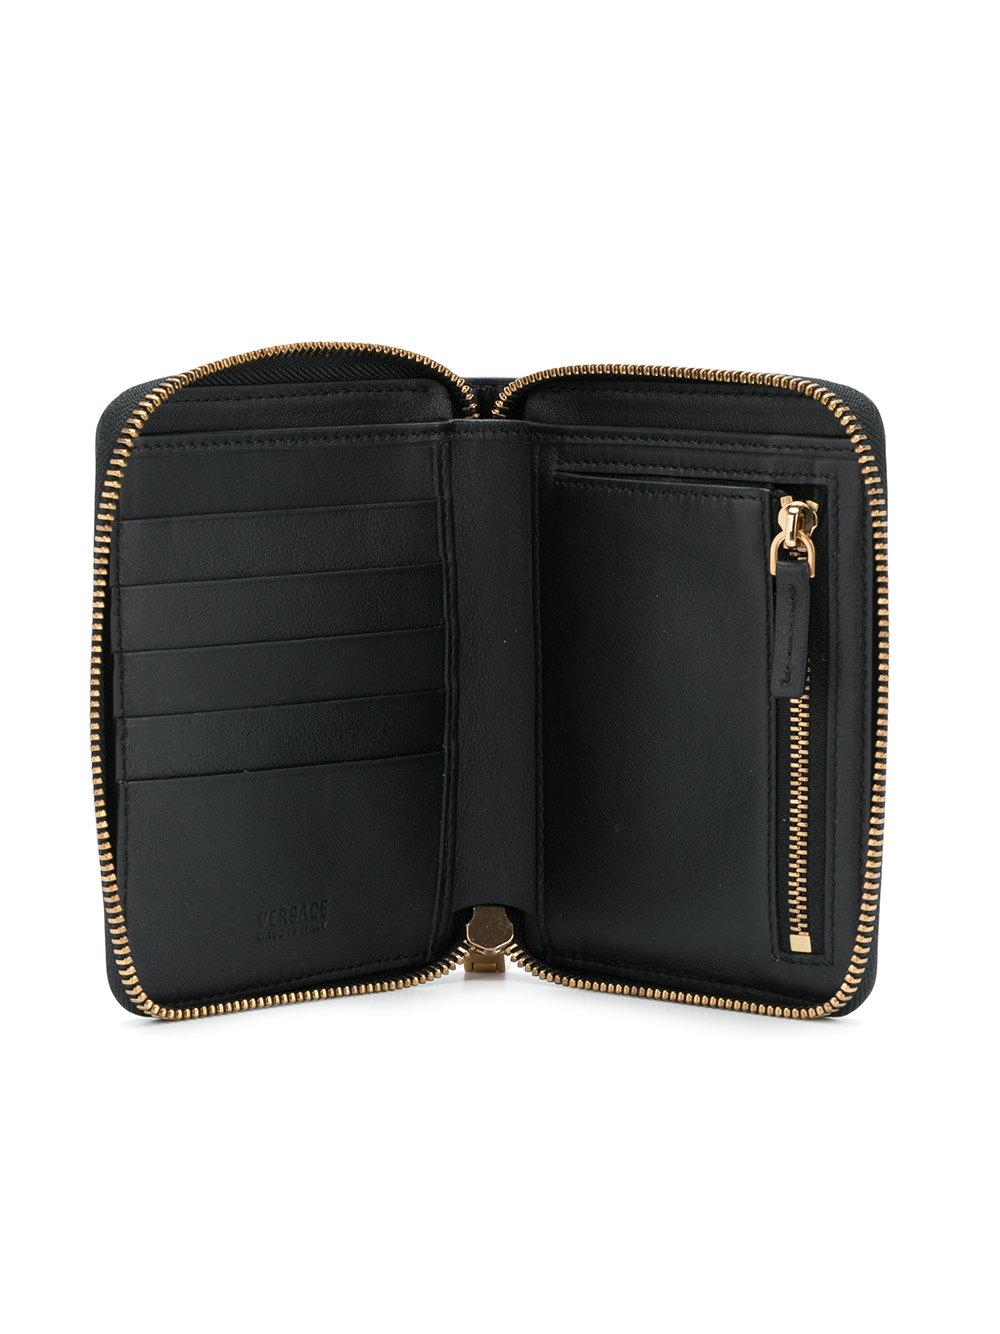 Versace Leather Medusa Zipped Wallet in Black - Lyst